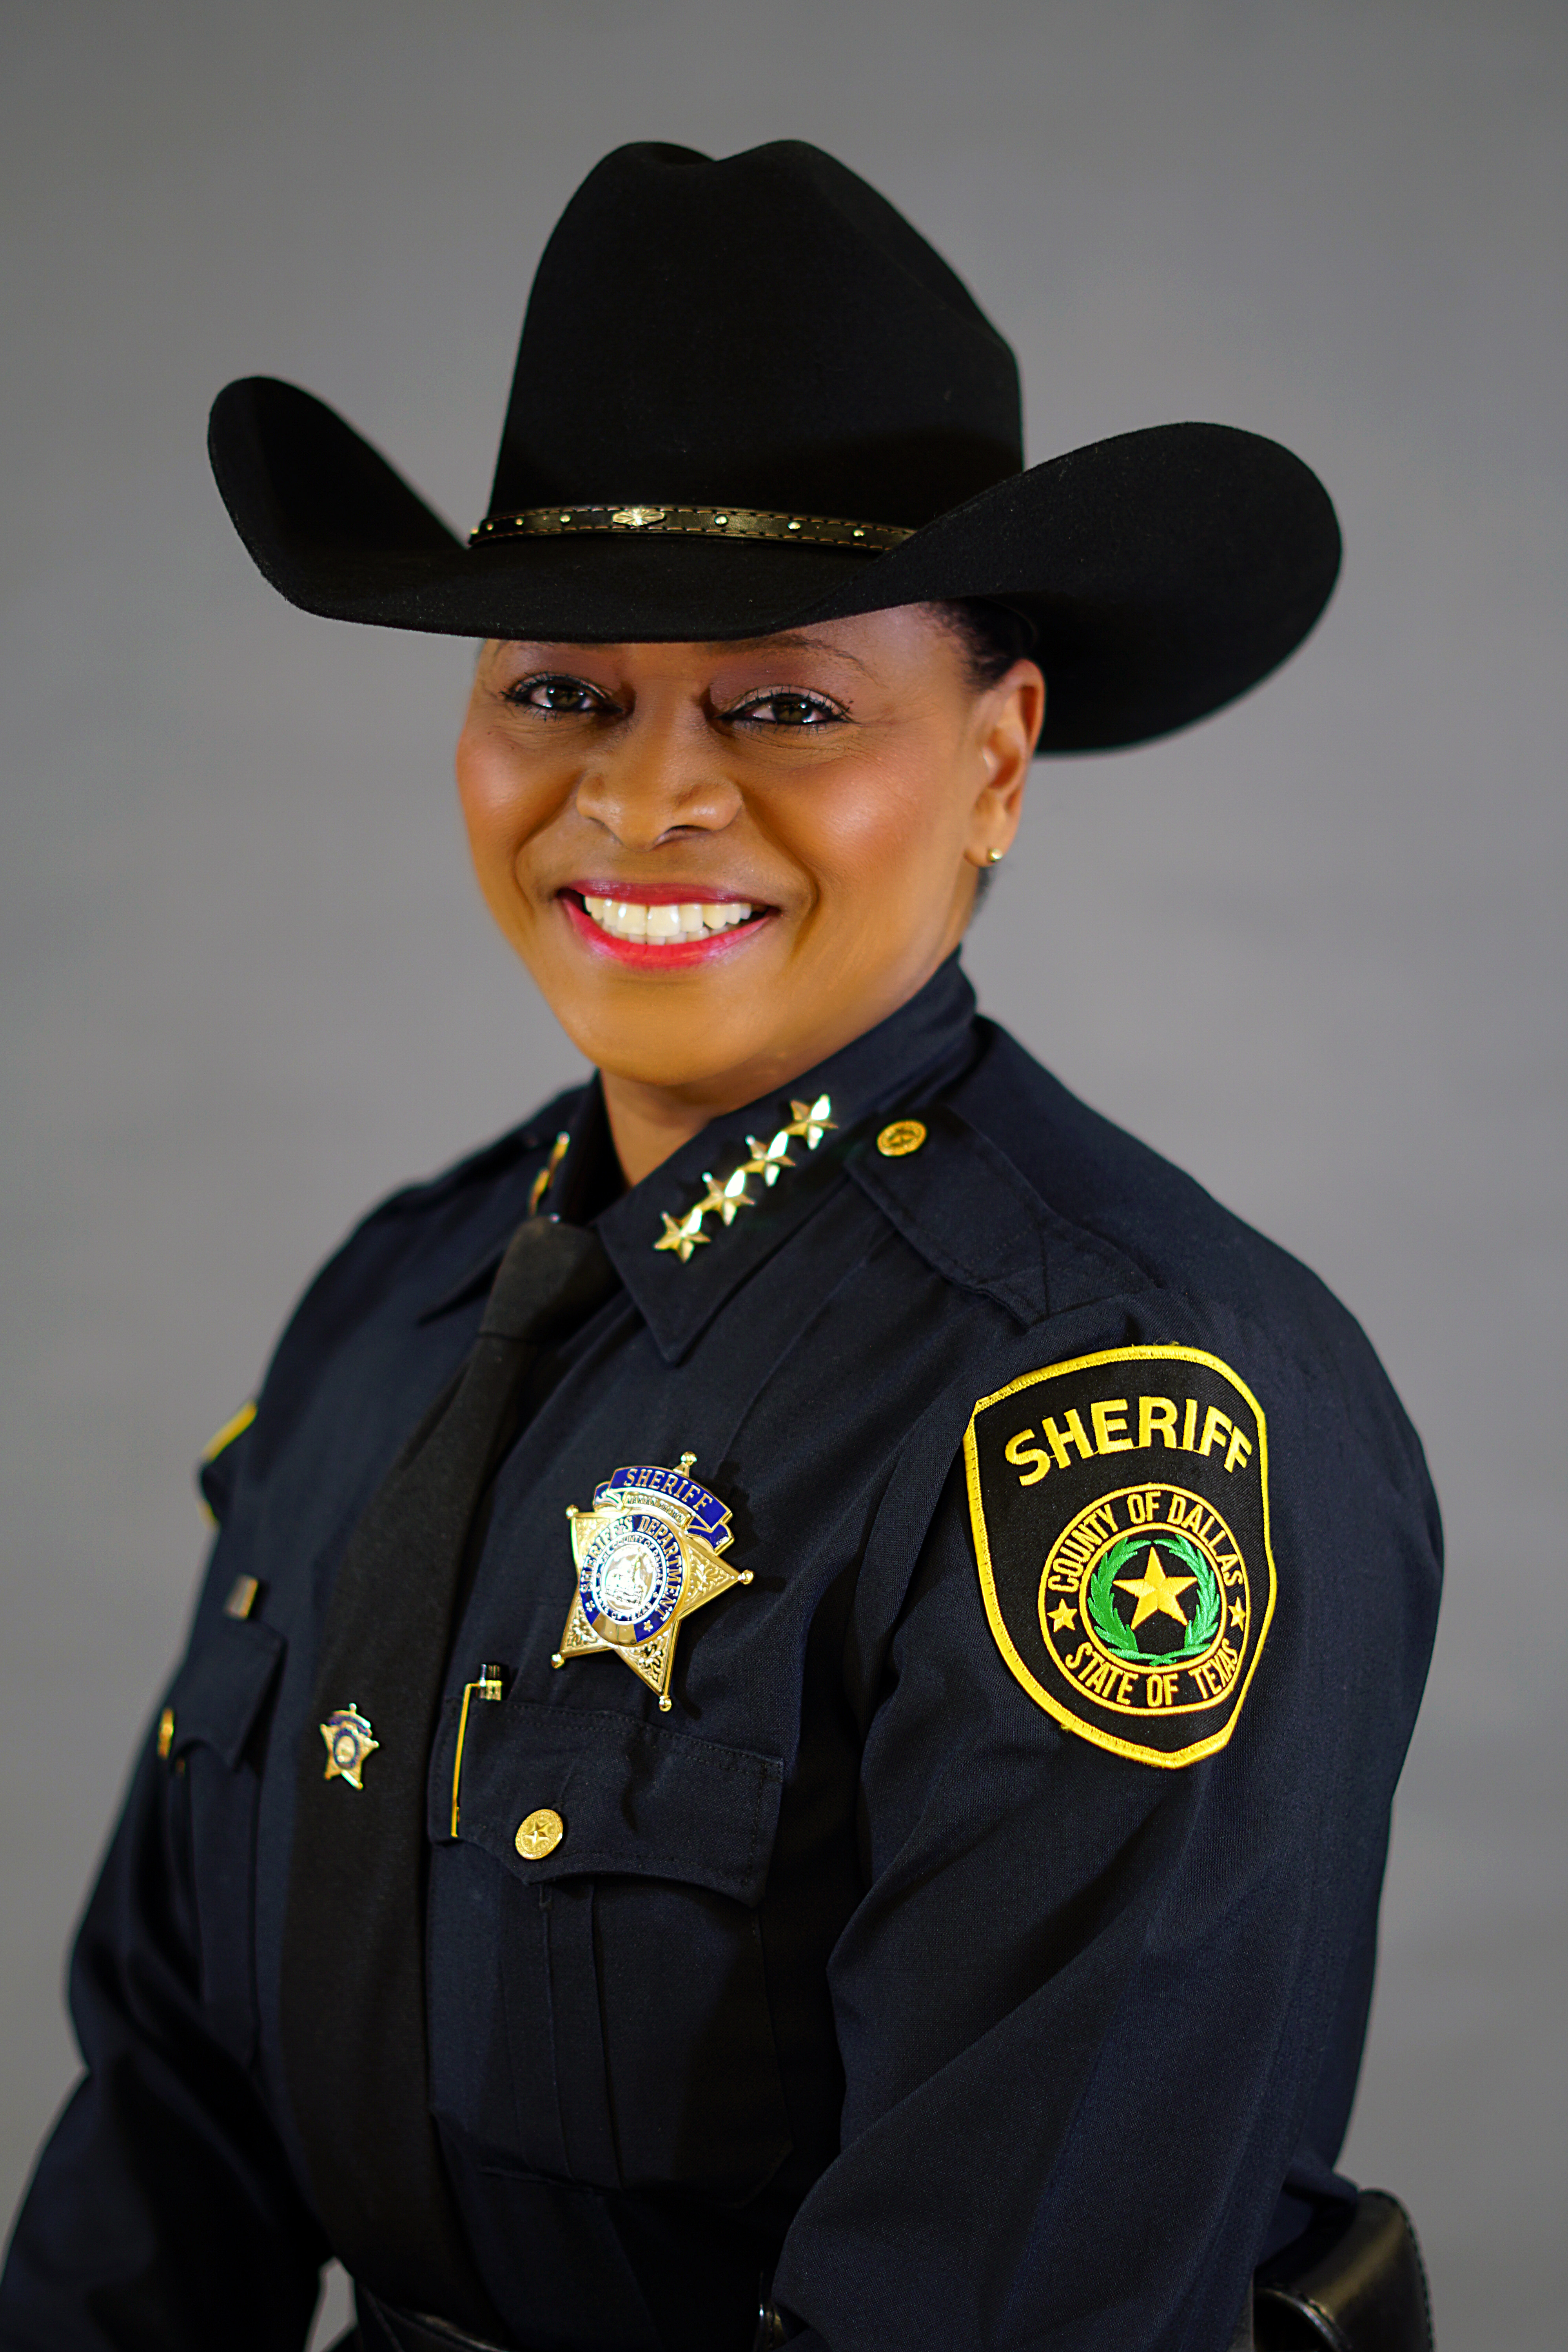 Sheriff Brown